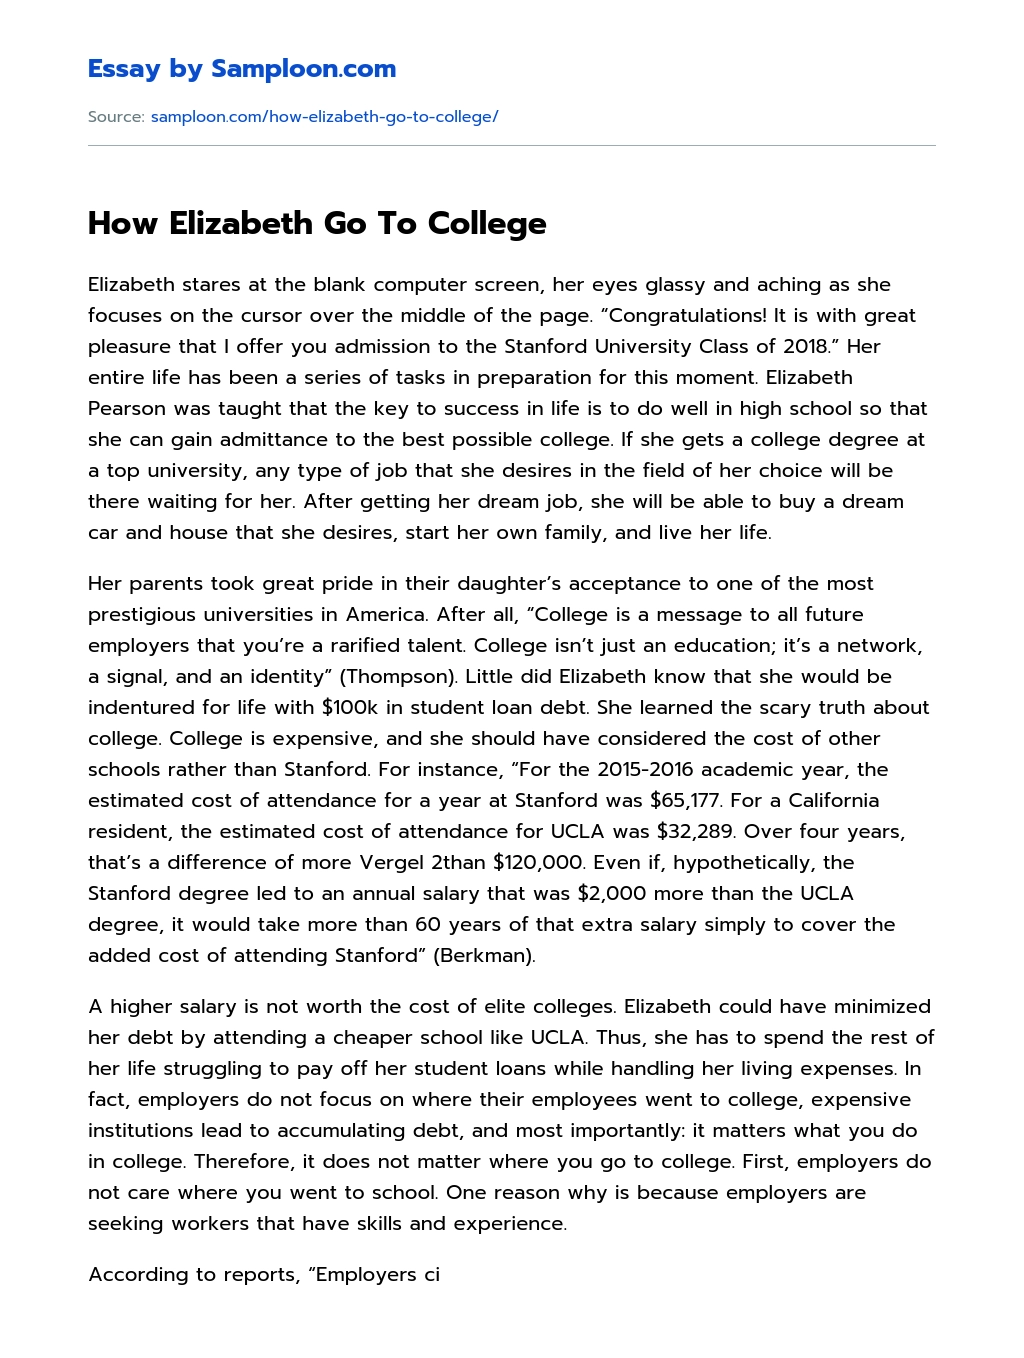 How Elizabeth Go To College essay